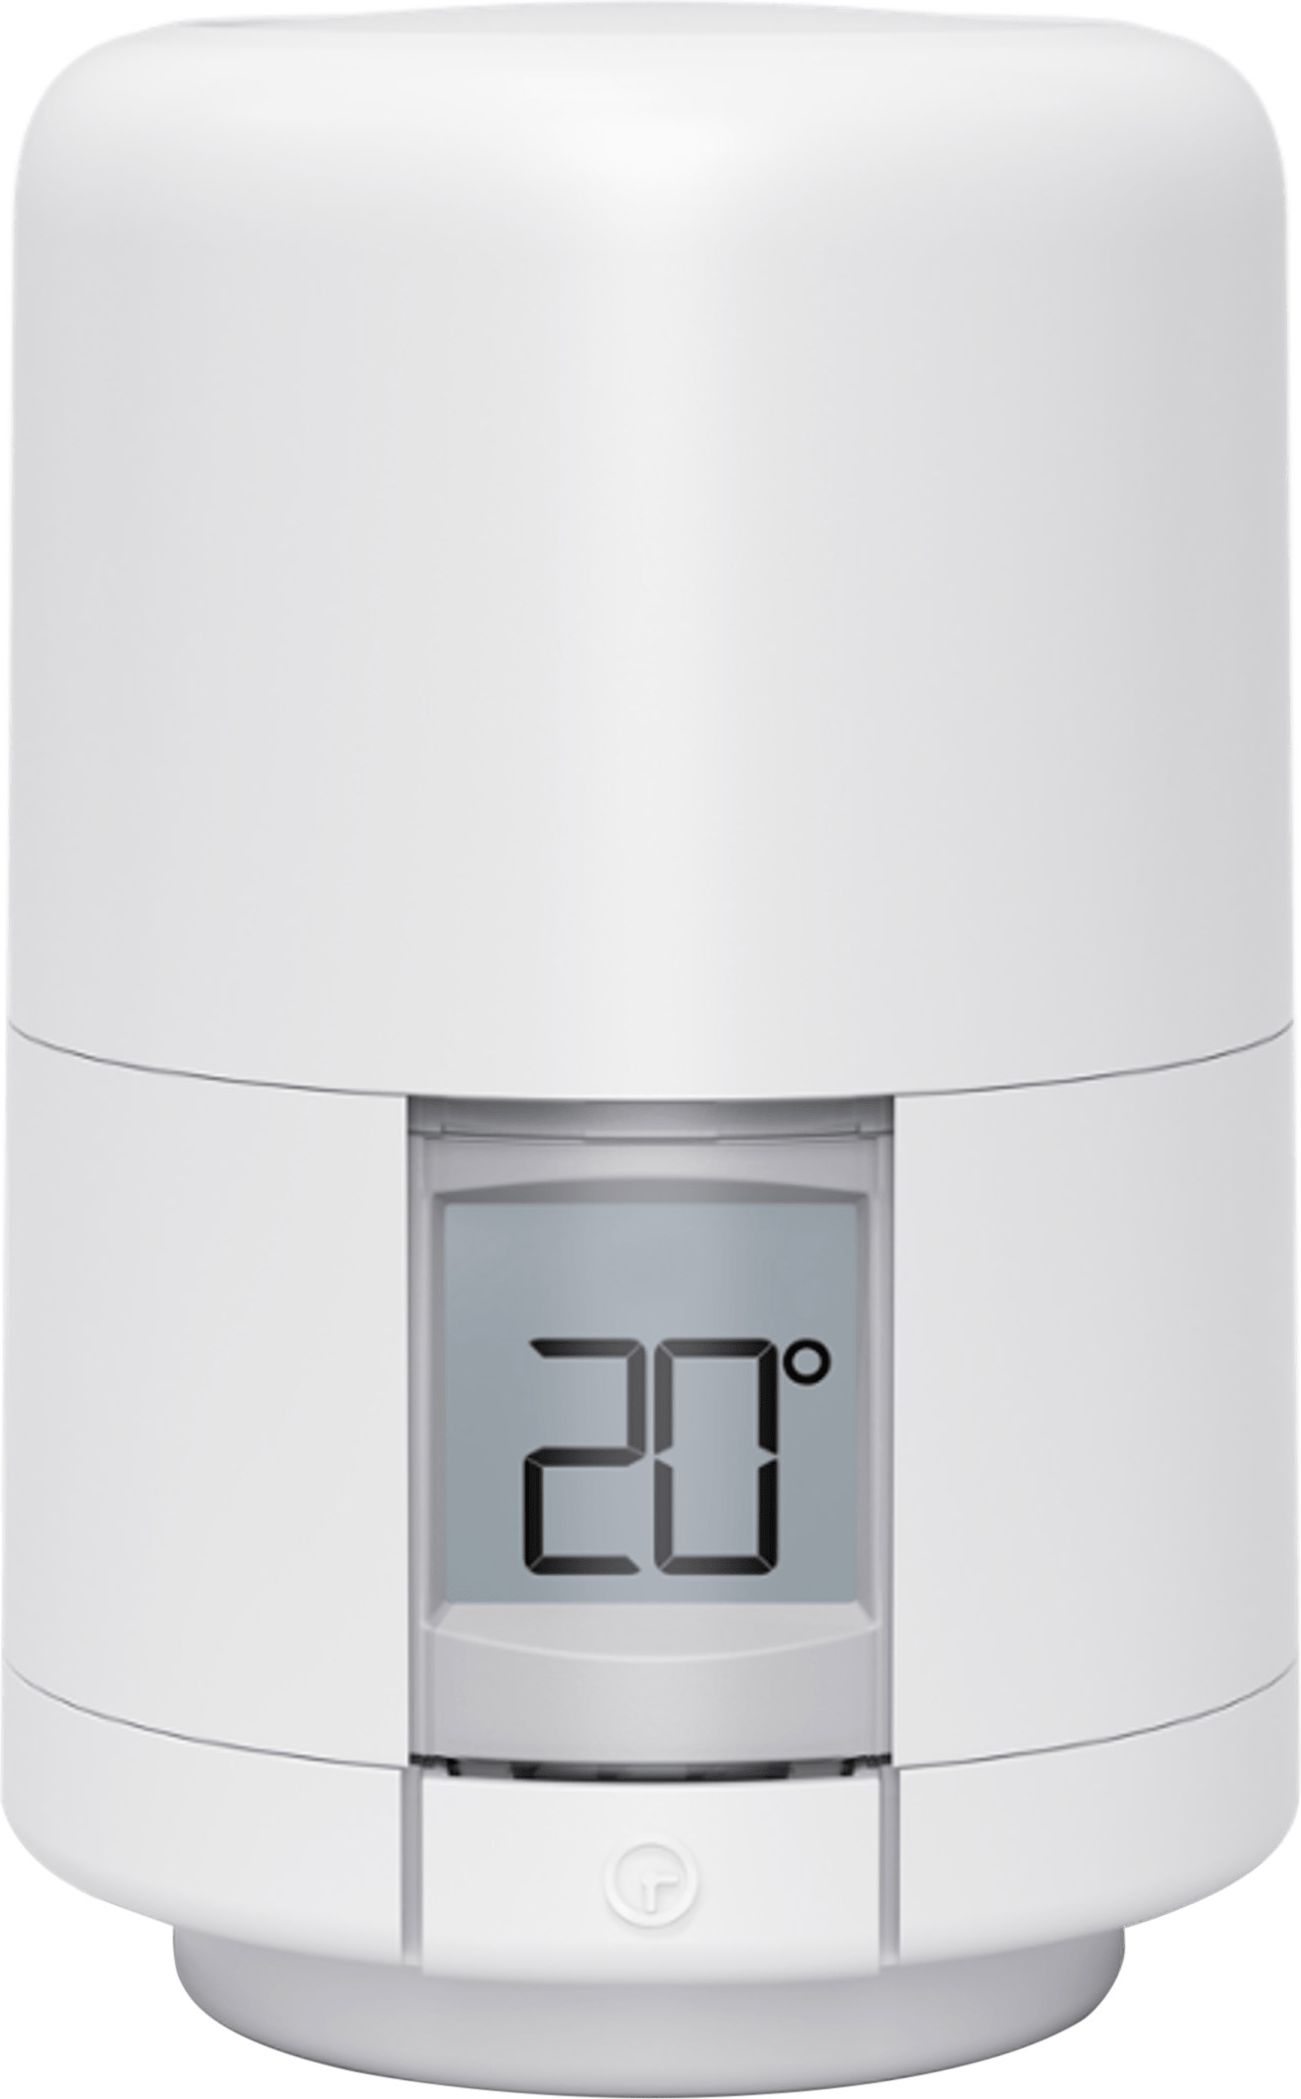 Hive Smart Radiator Thermostat - Self install, White